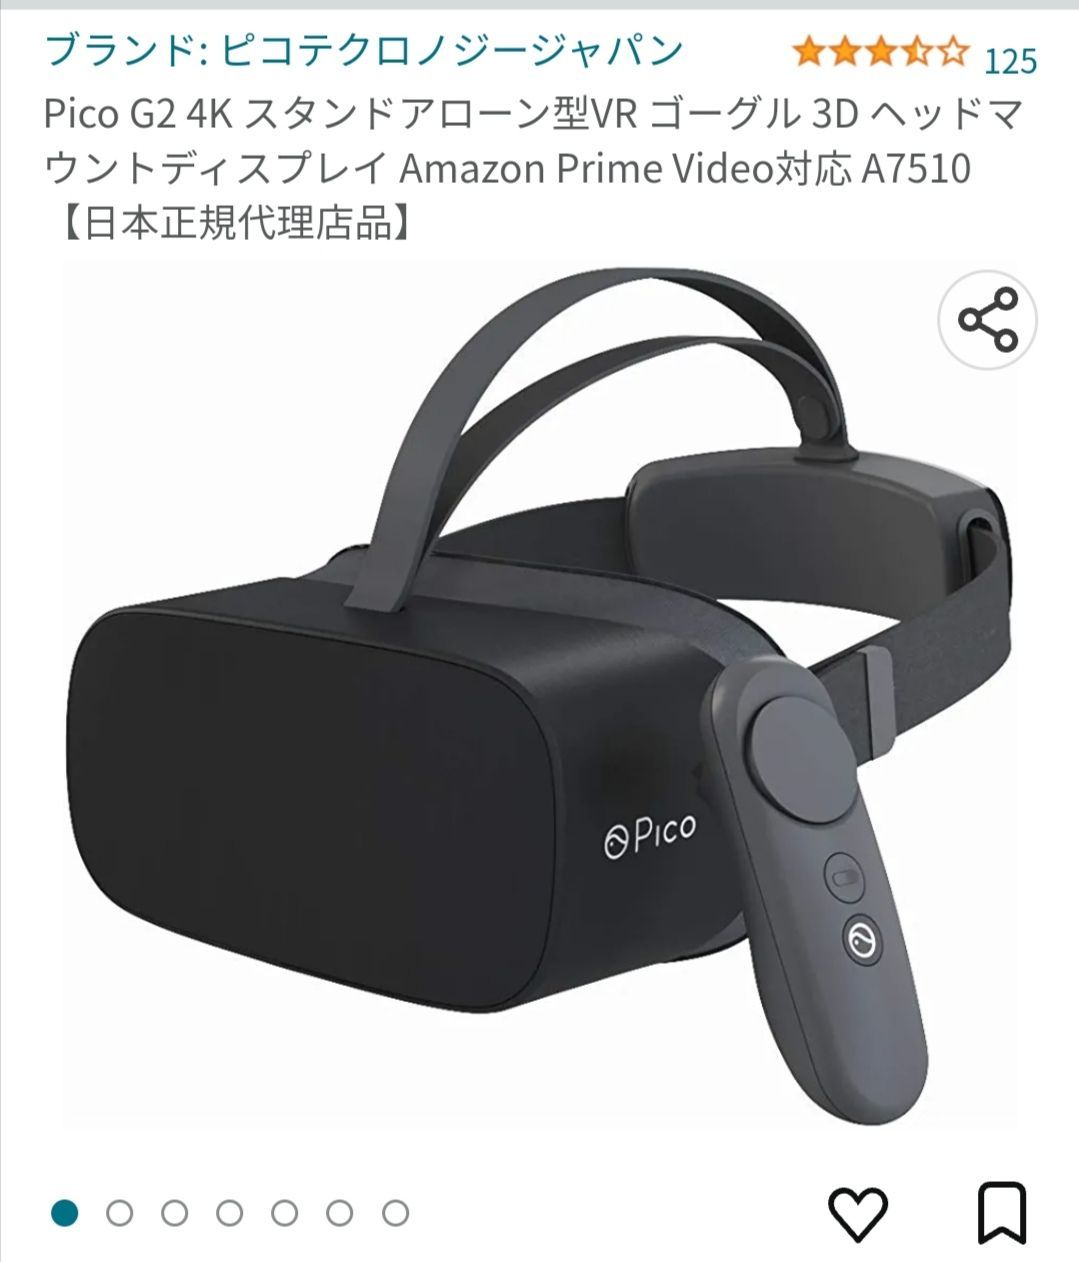 Pico G2 4K スタンドアローン型VR ゴーグル - その他